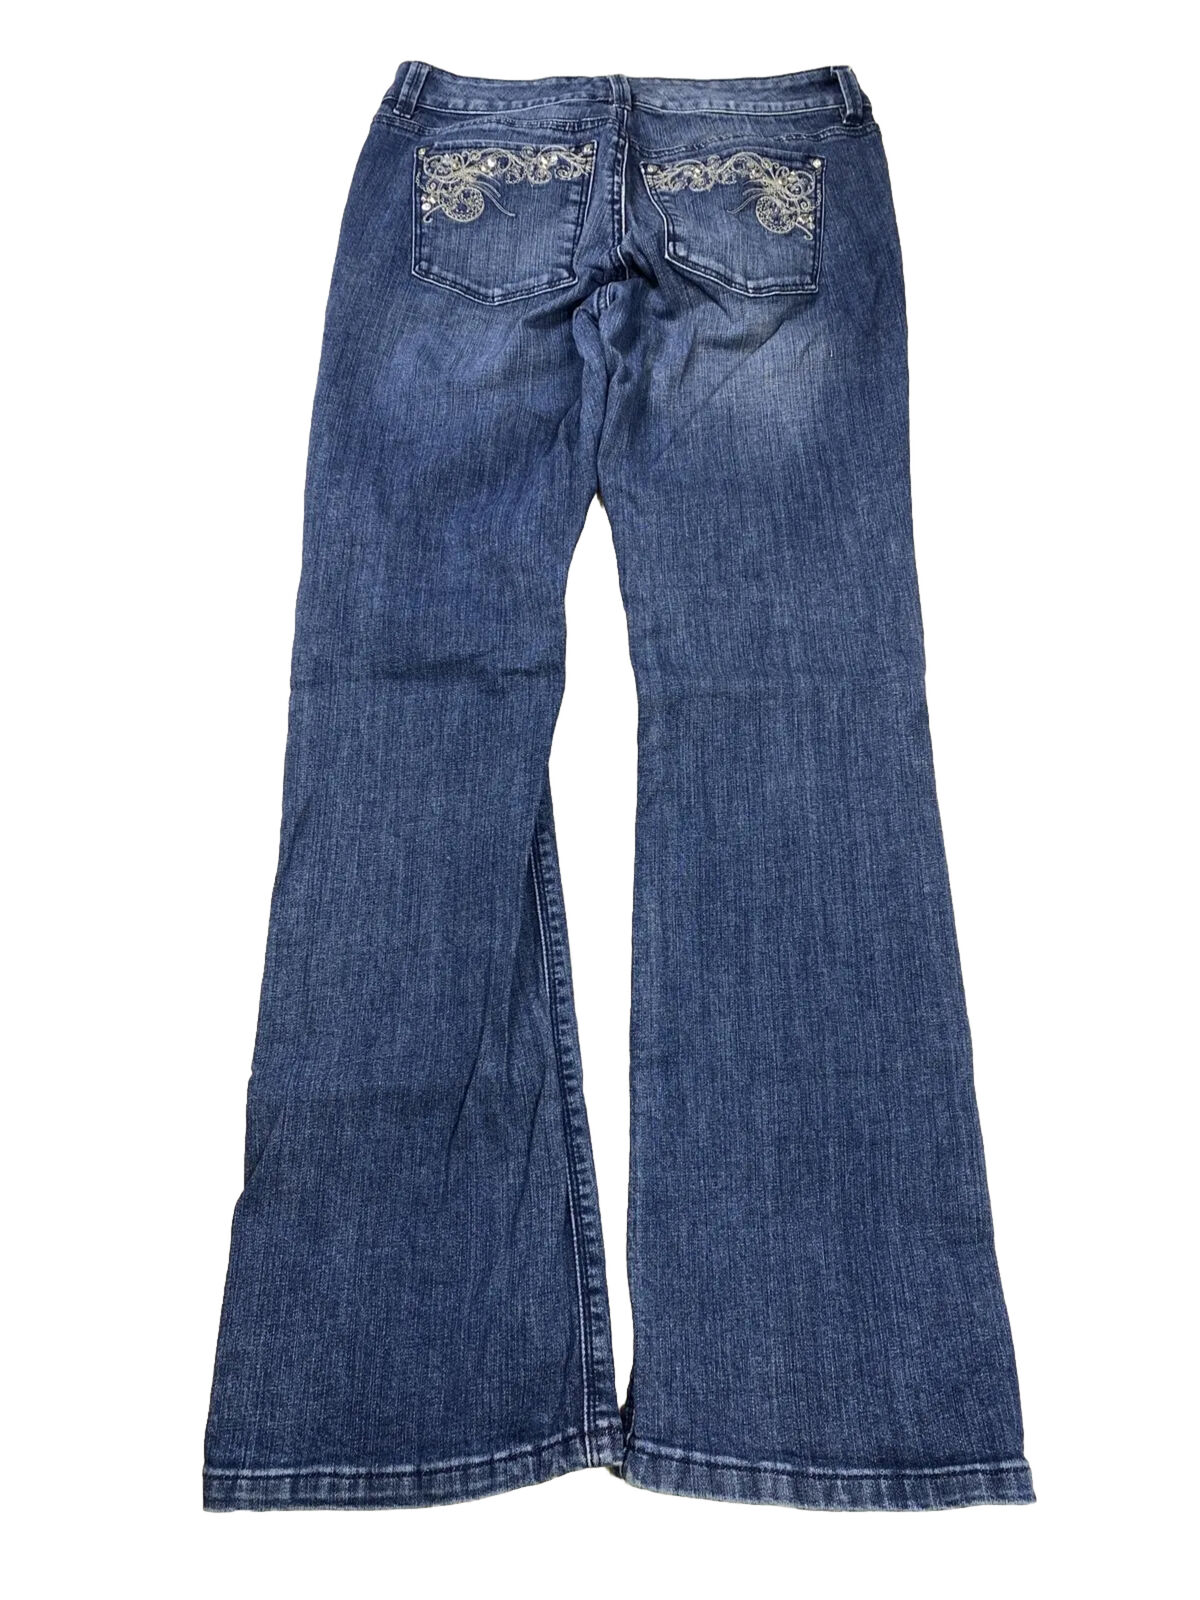 White House Black Market Jeans de corte de bota de lavado medio para mujer - 2 cortos